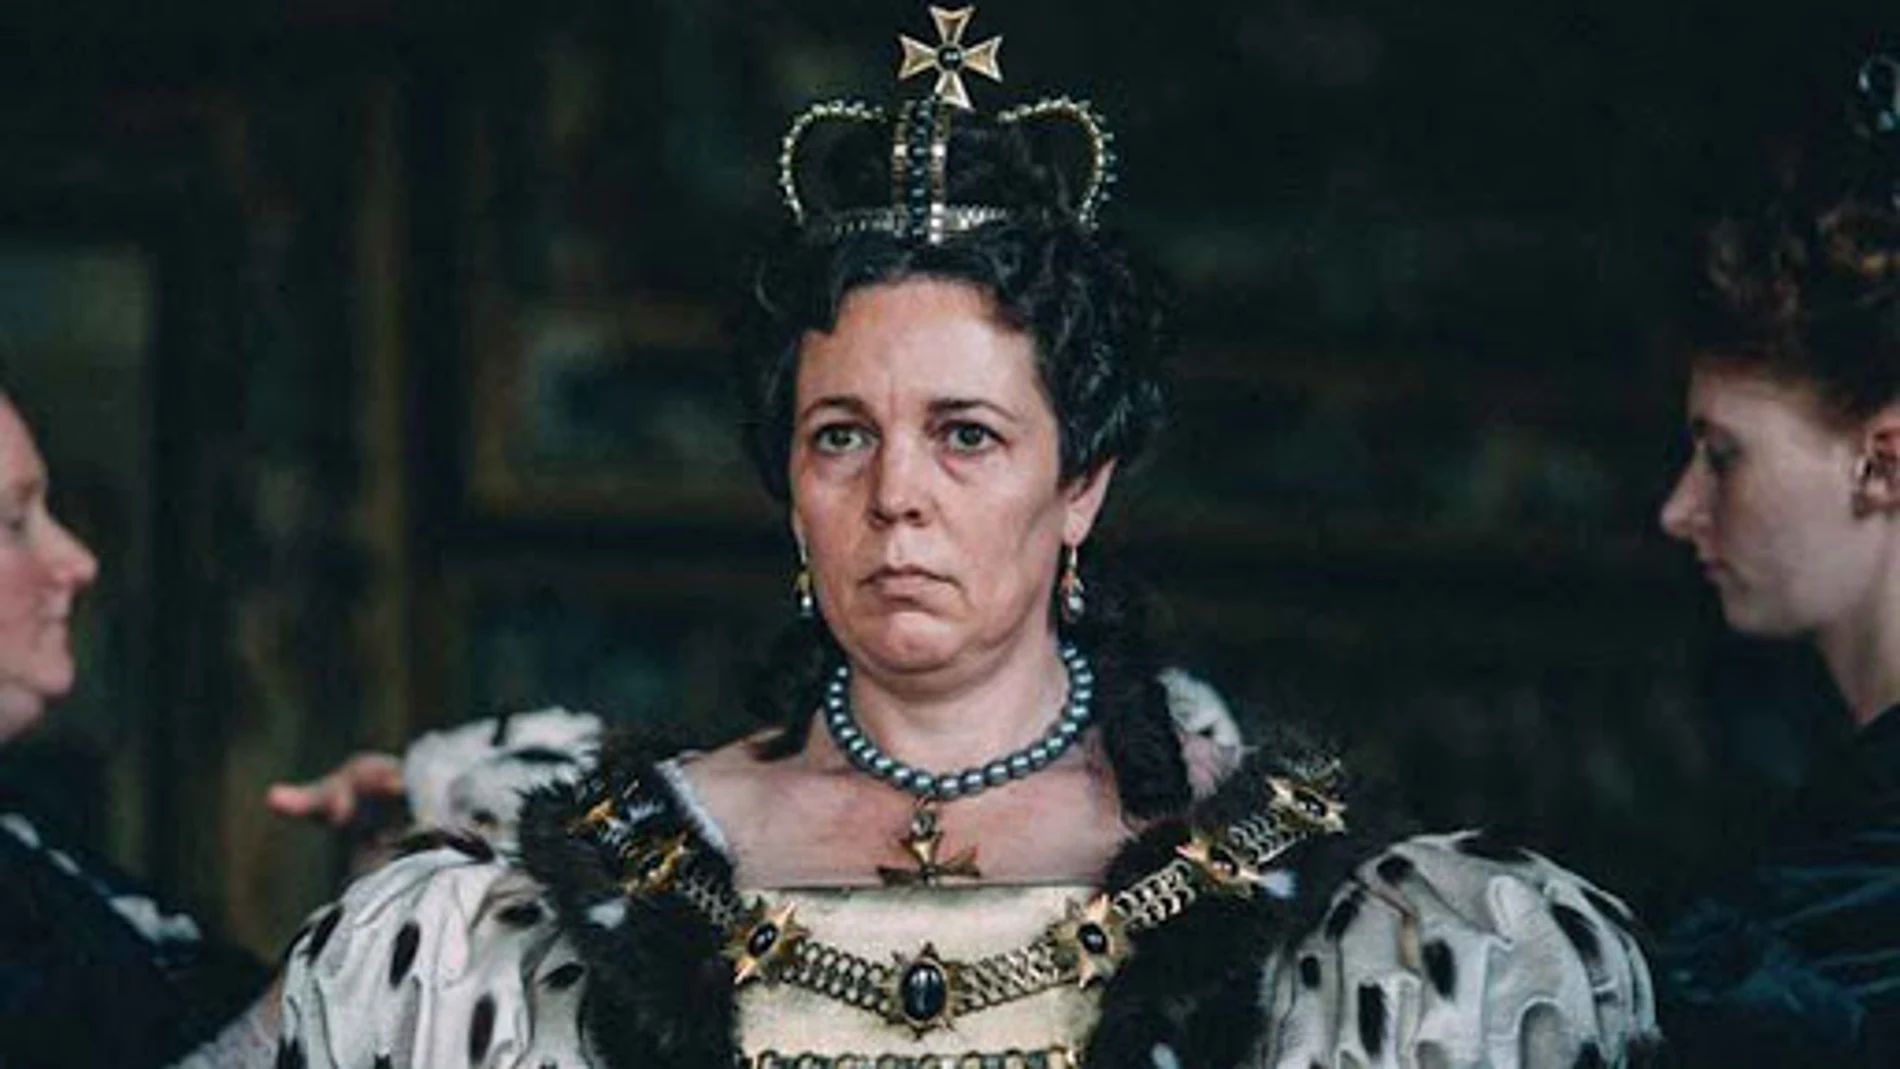 Oliva Colman interpretó a la reina Ana de Inglaterra en la película "La favorita"